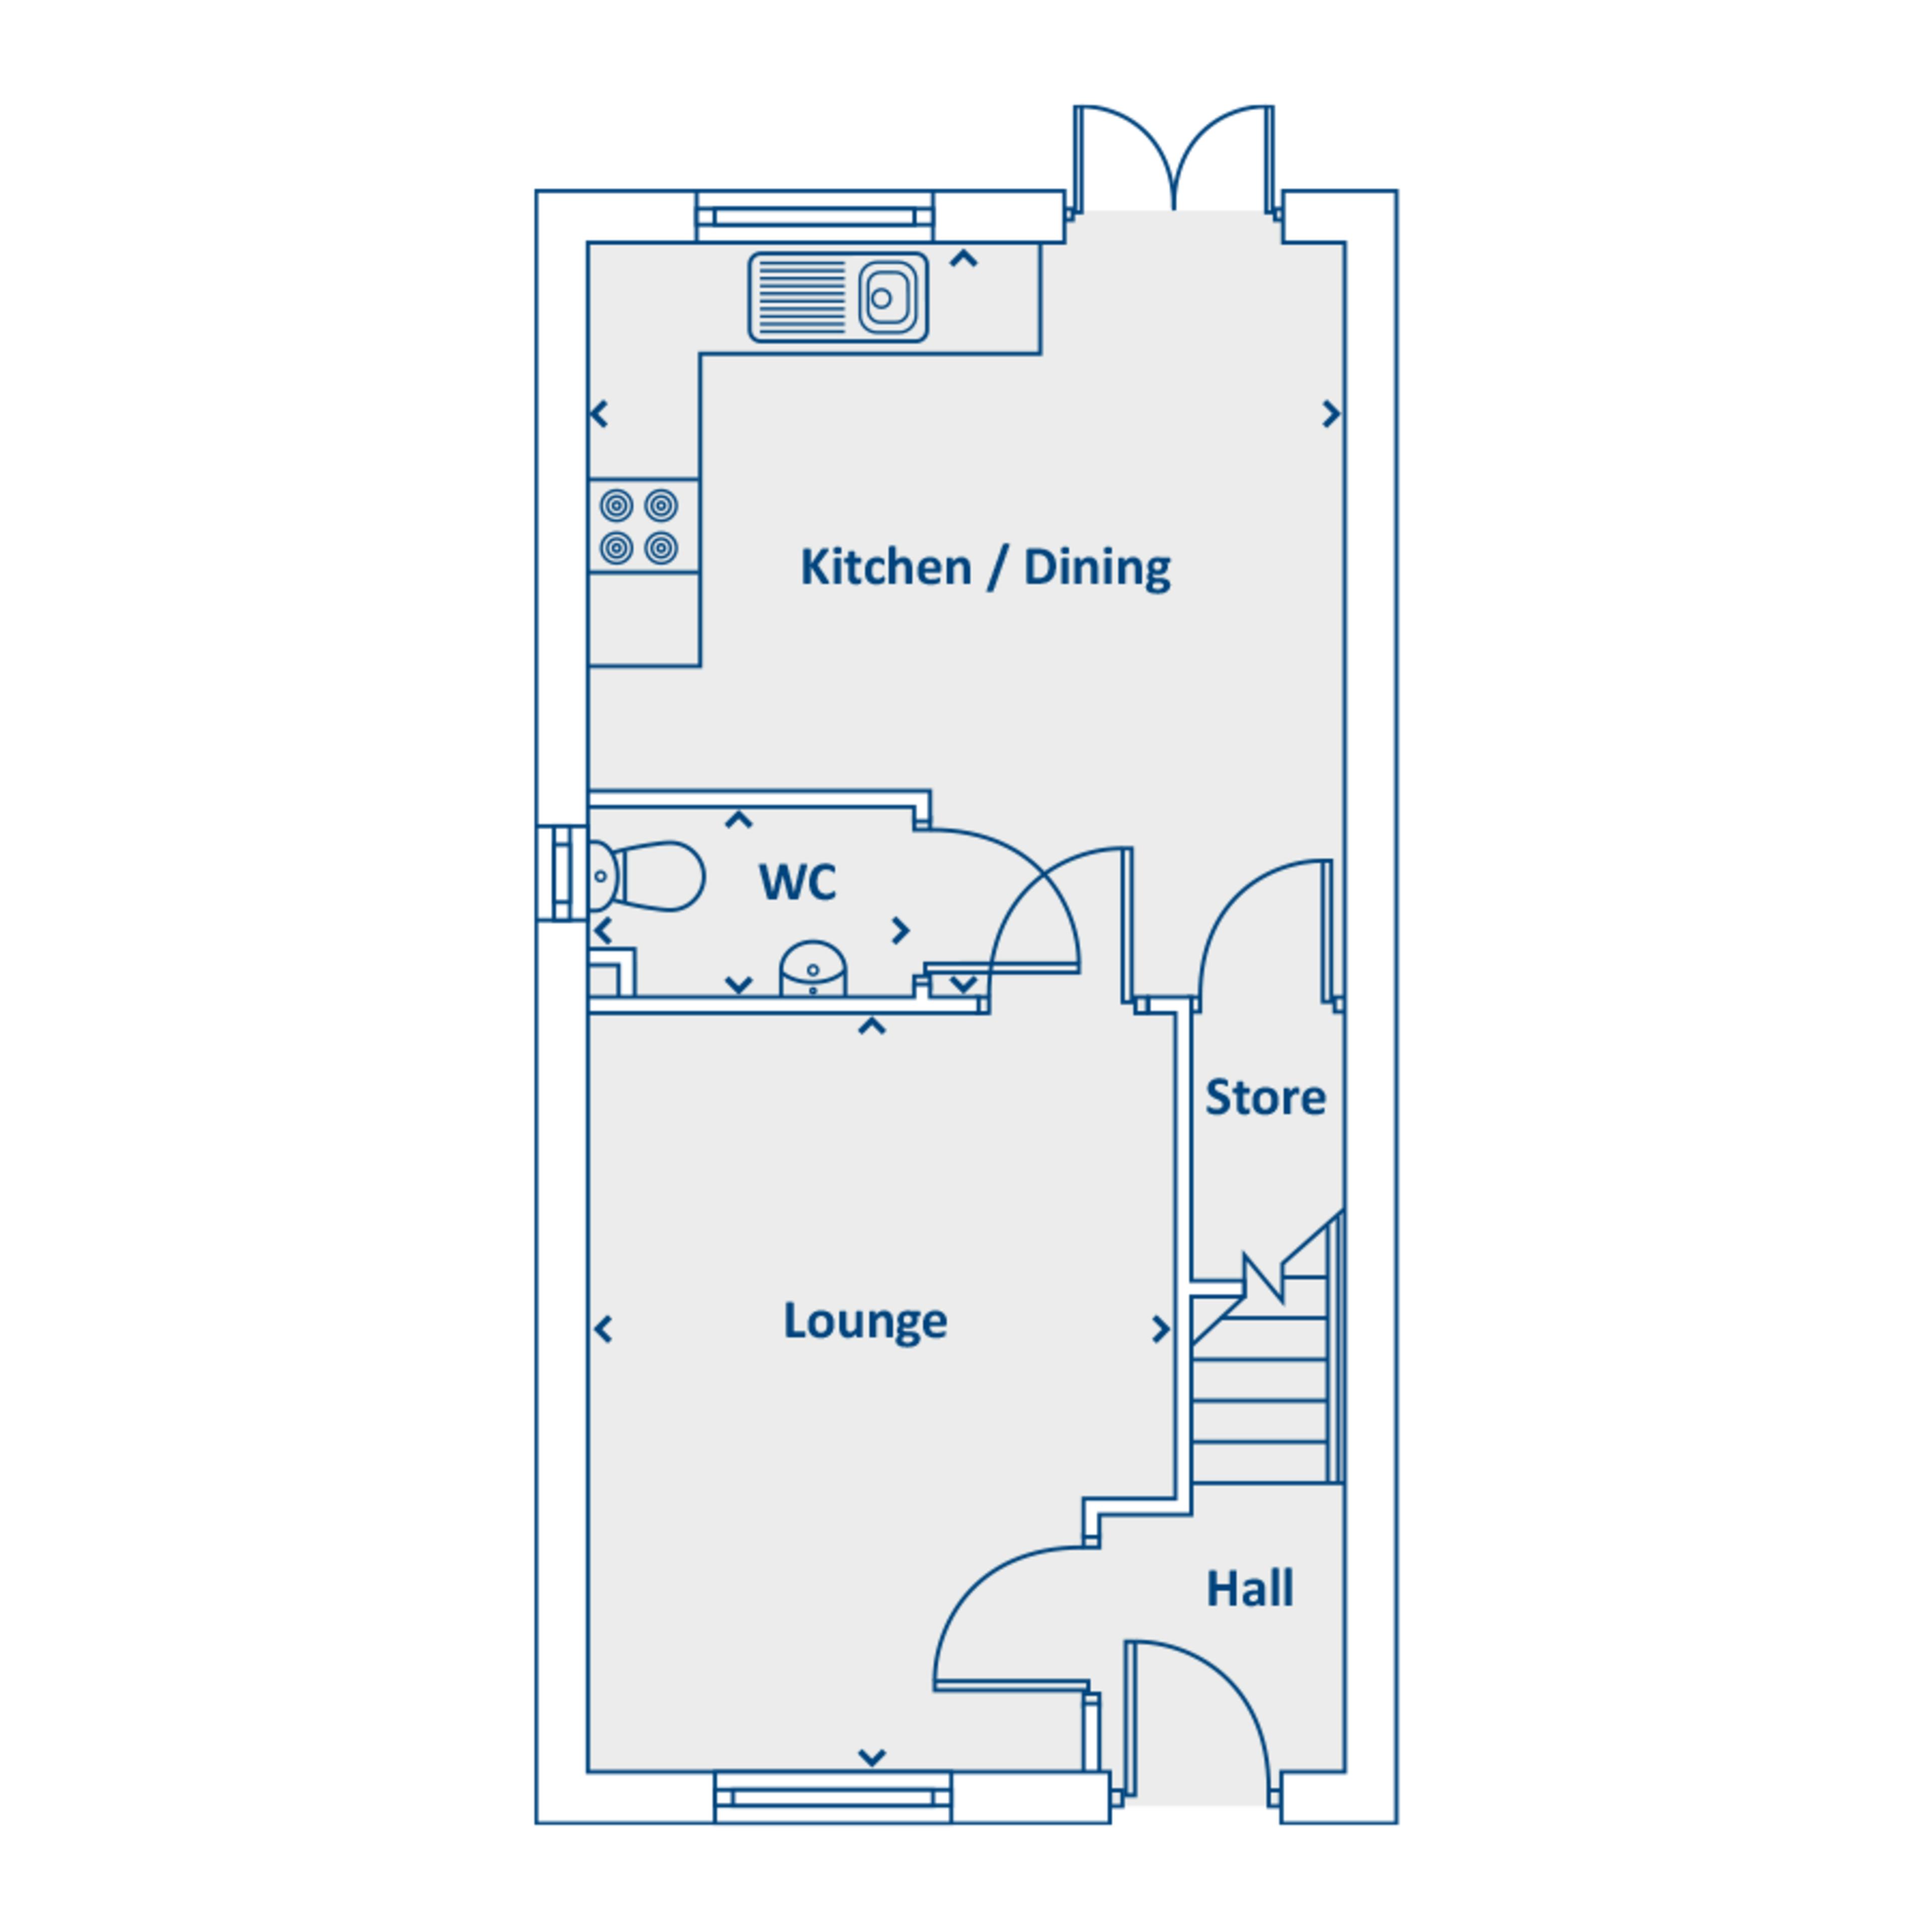 Floorplan of the ground floor in Adlington